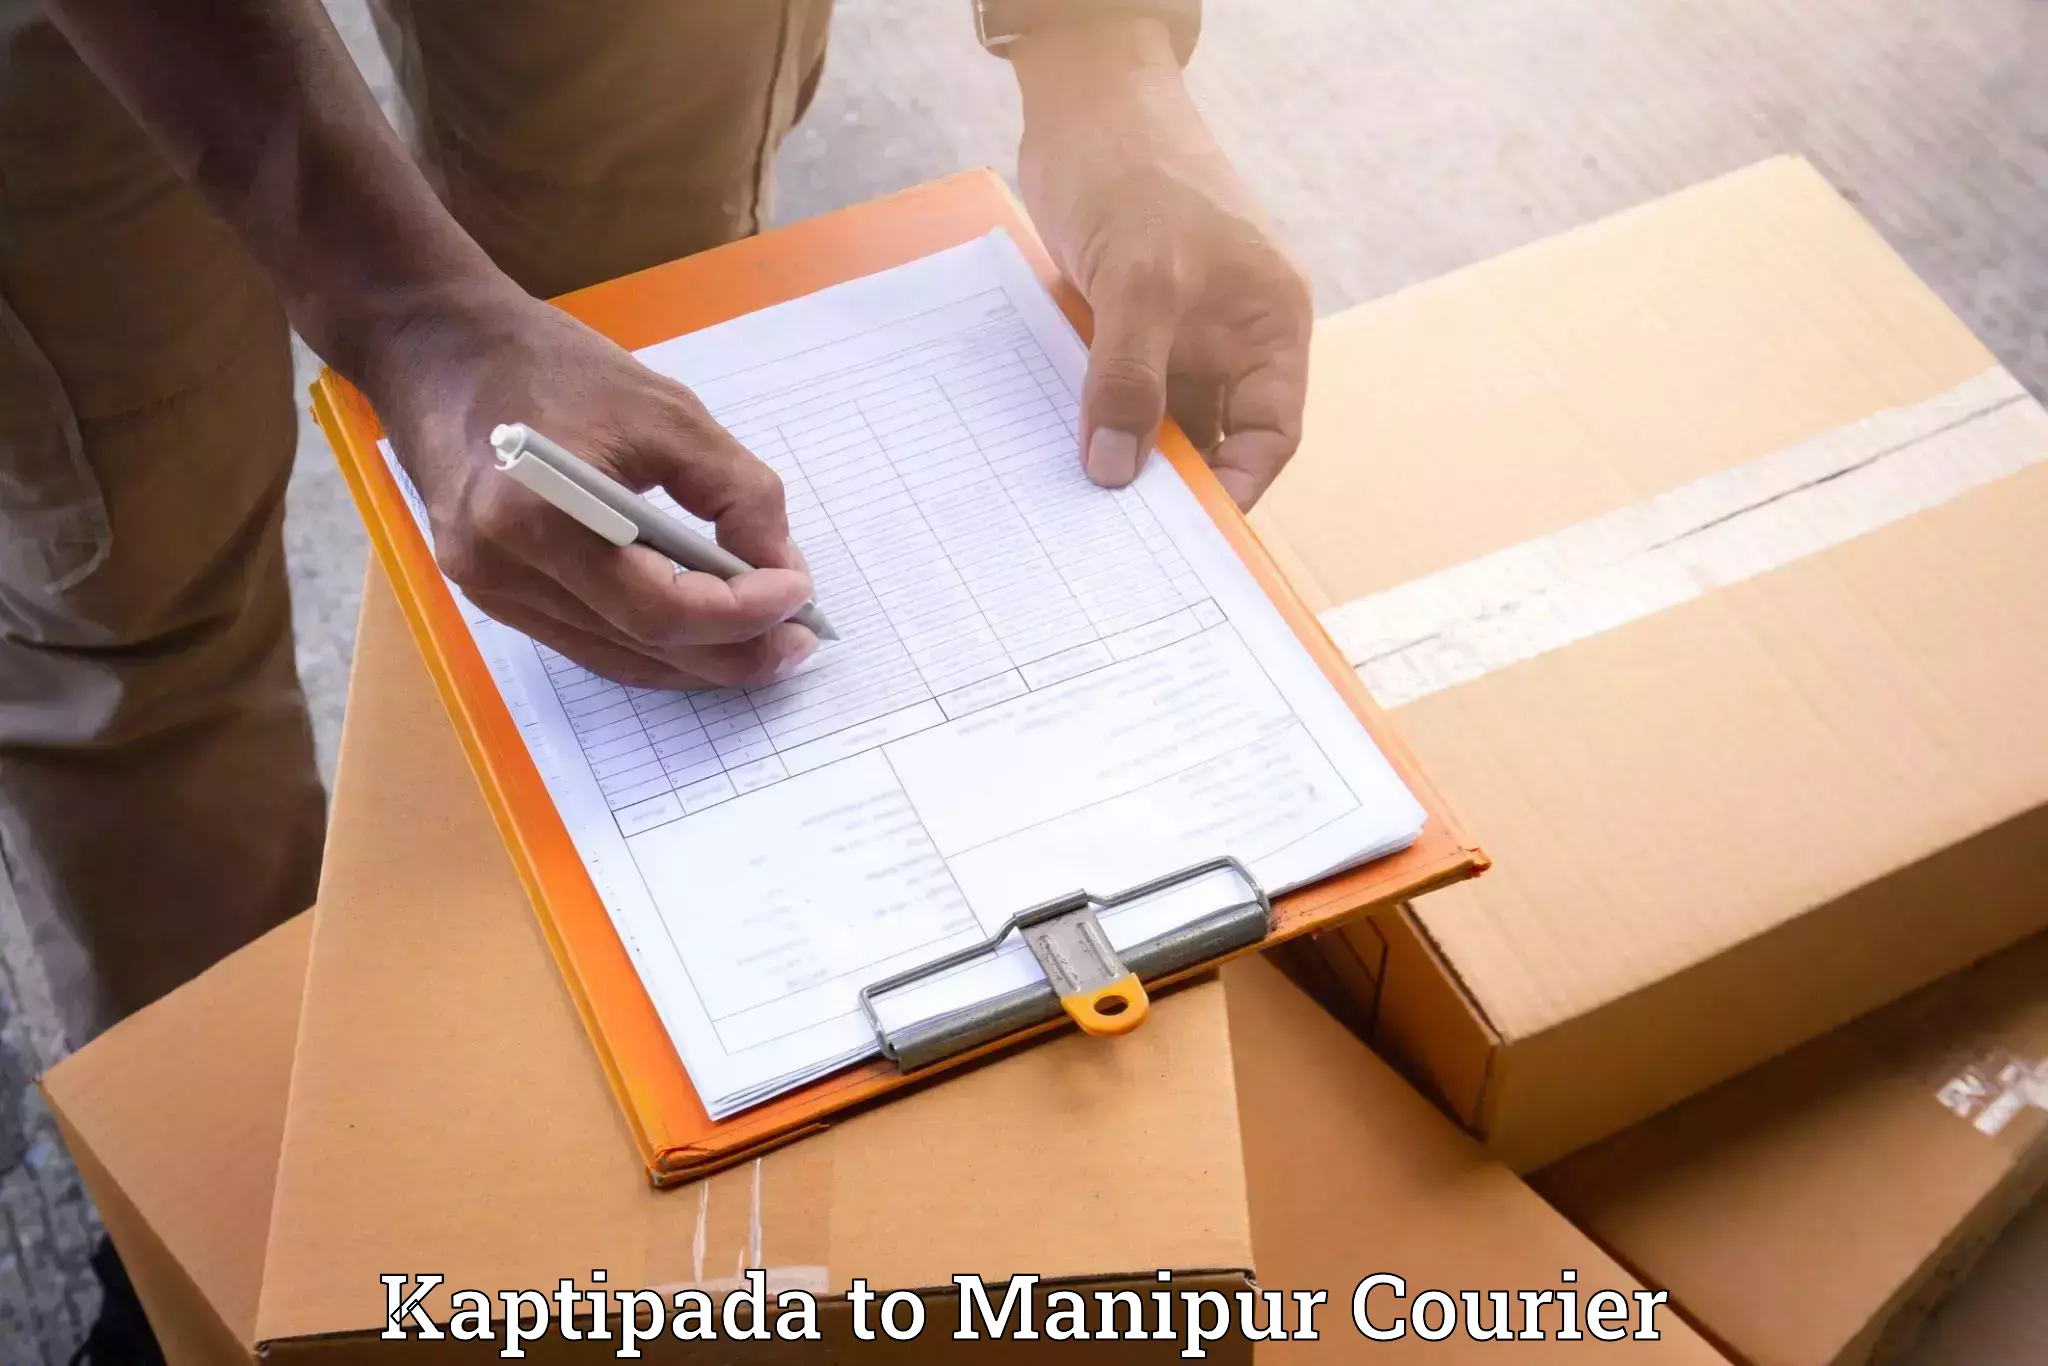 Quality moving company Kaptipada to Kaptipada